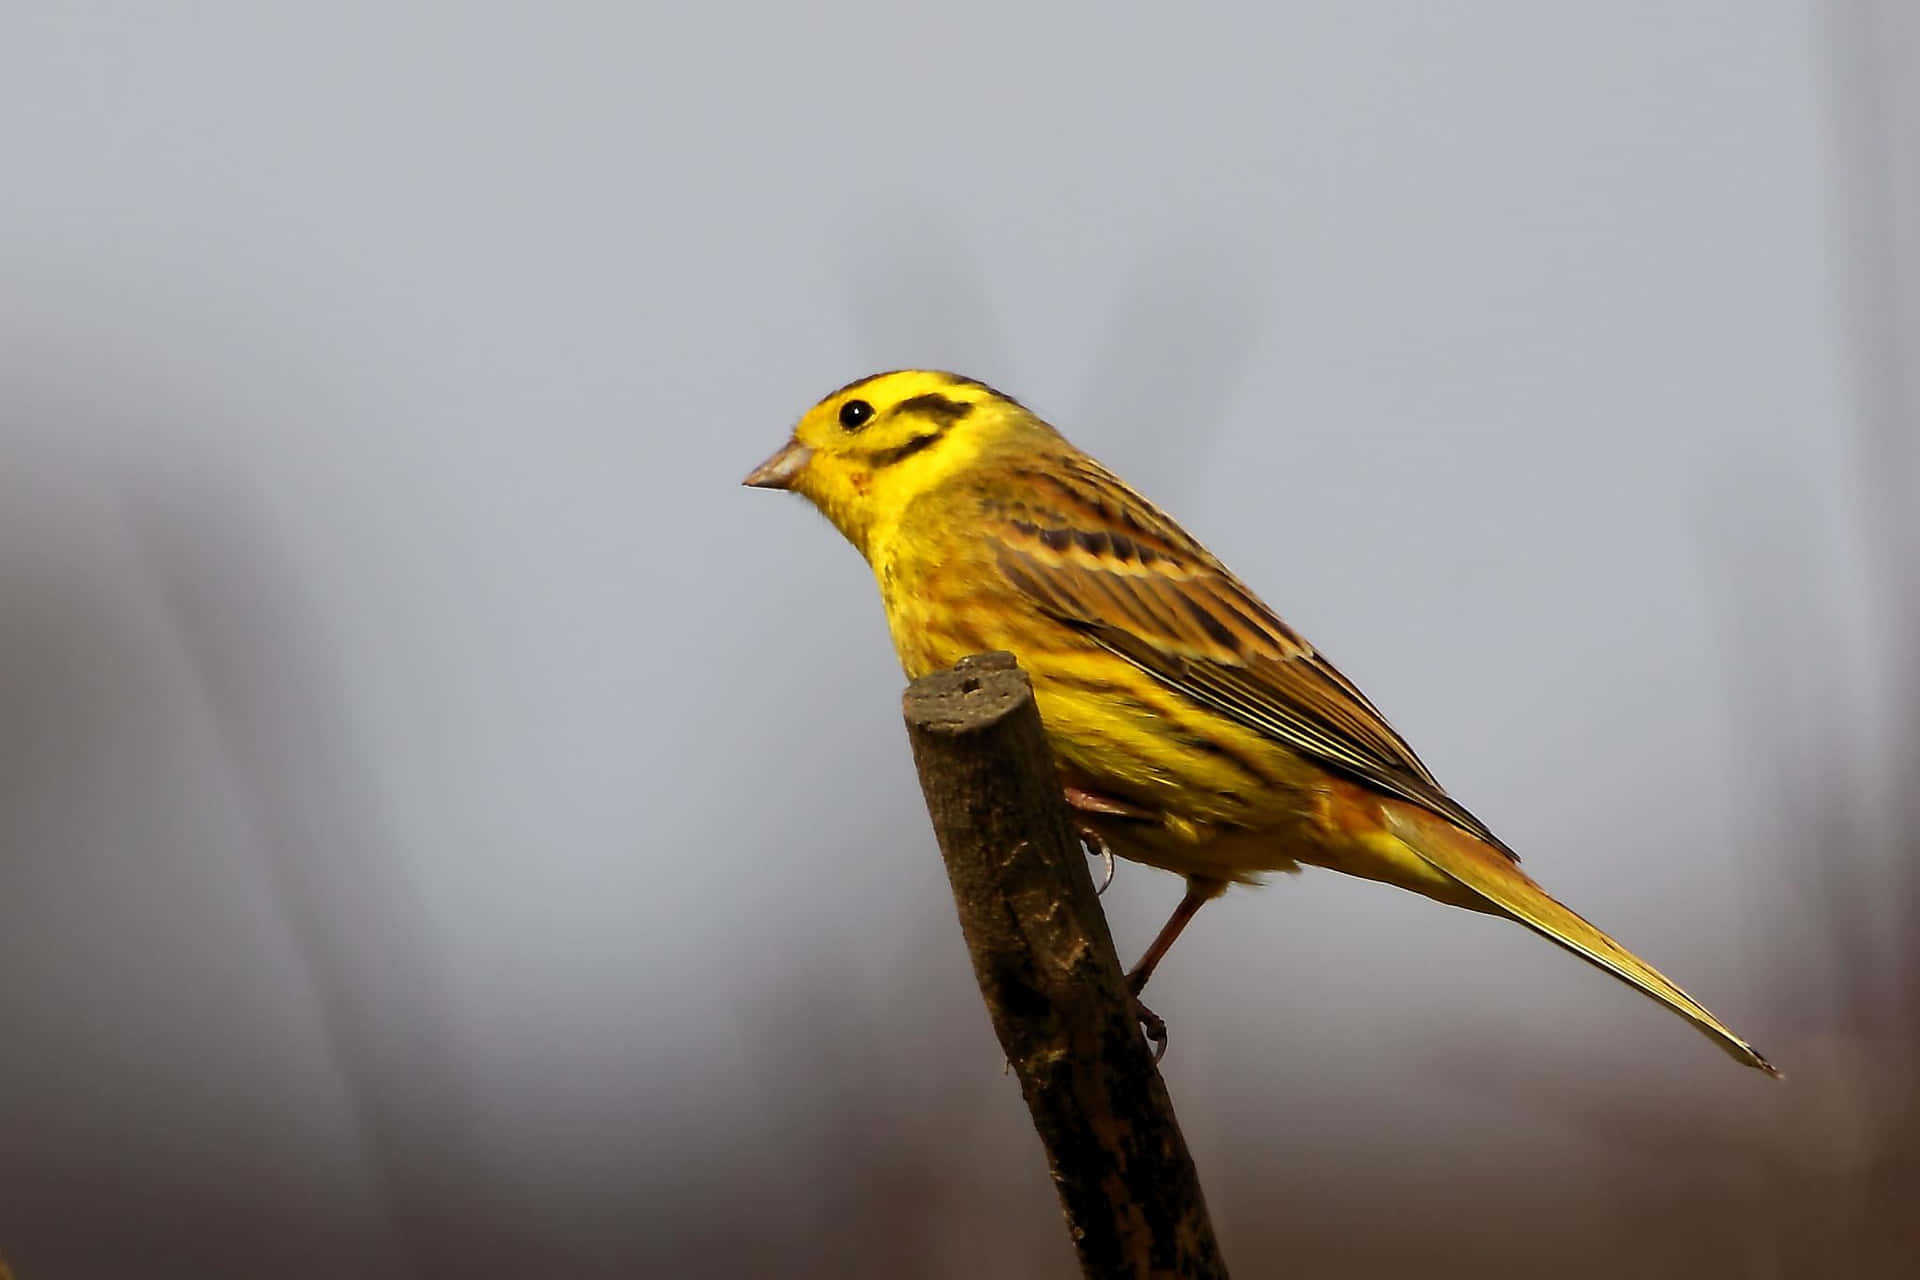 Stunning Yellowhammer Bird Perched on a Branch Wallpaper